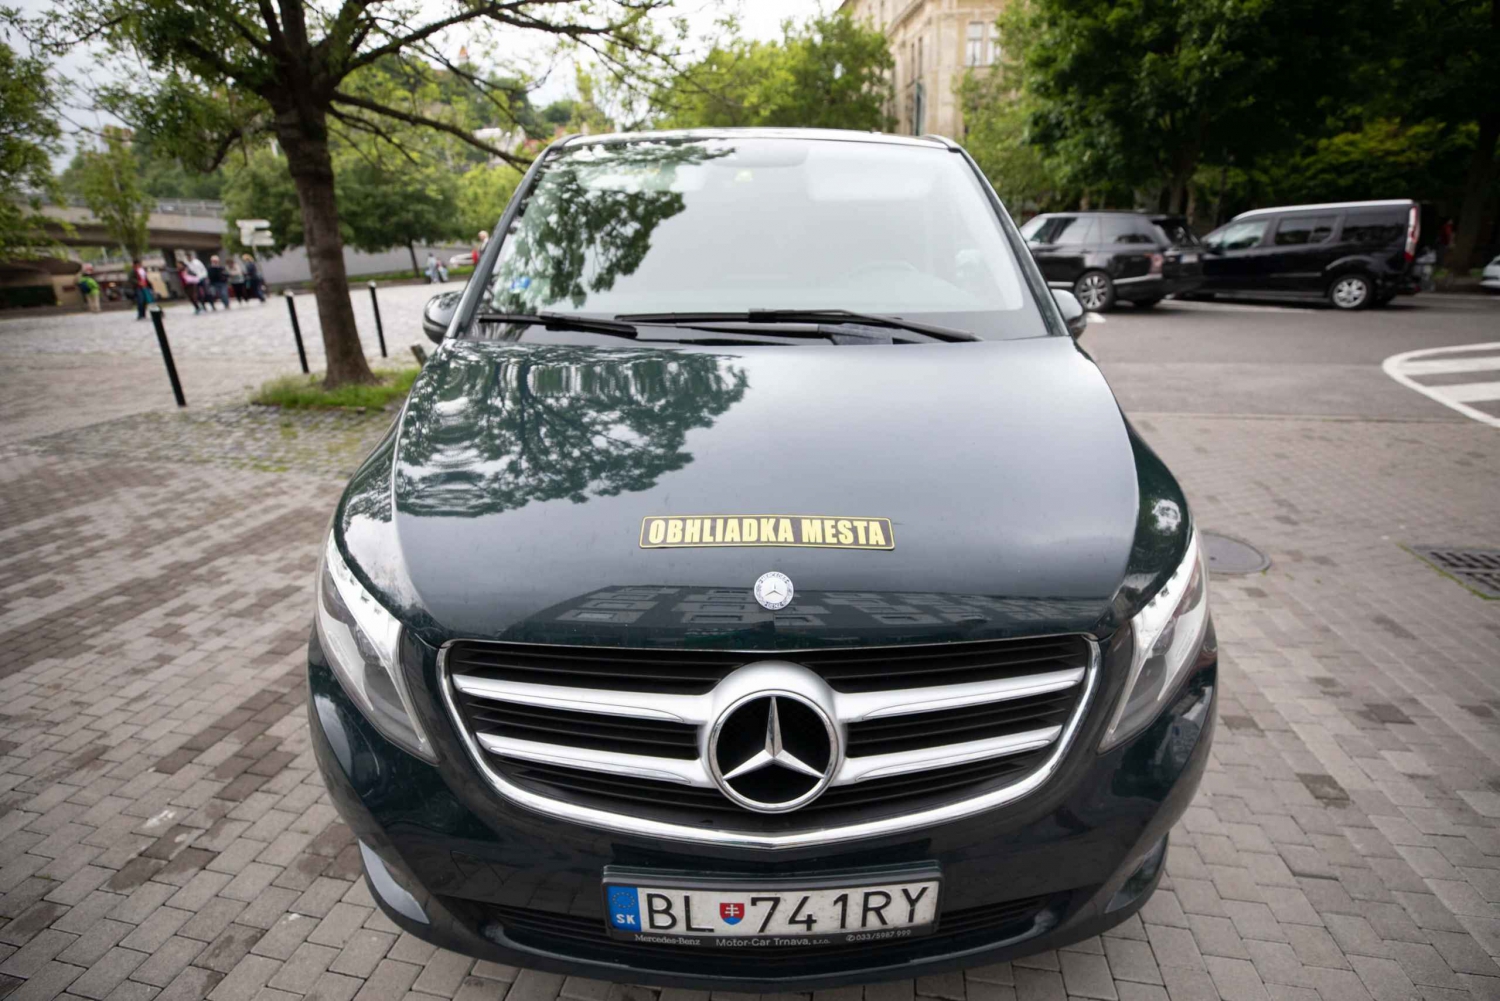 Bratislava: Private City Highlights Tour by Car